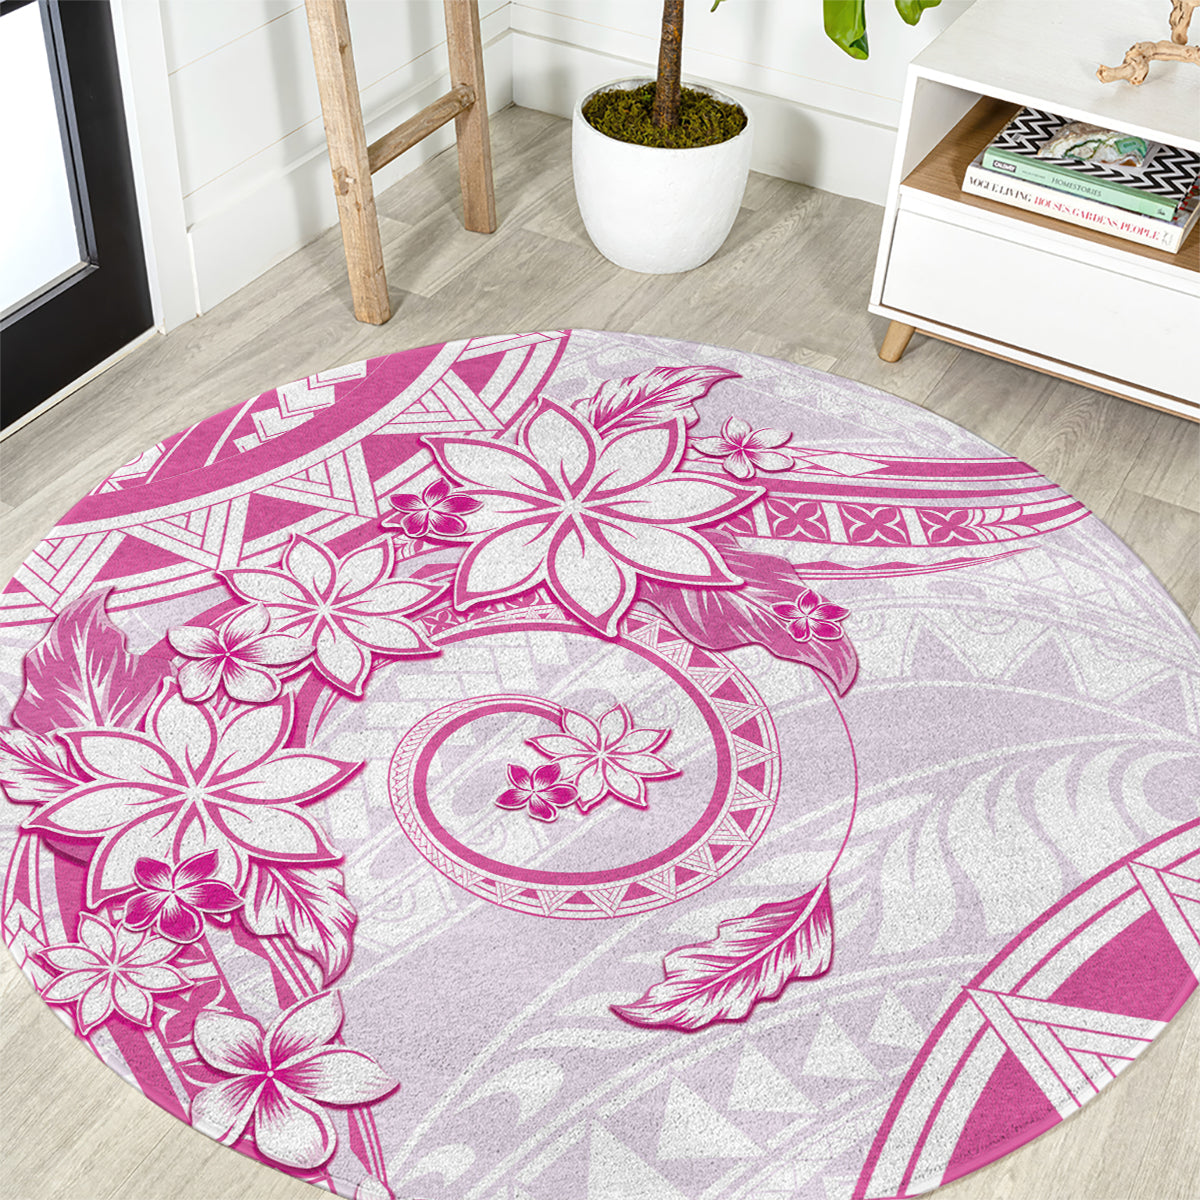 Polynesian Pattern With Plumeria Flowers Round Carpet Pink